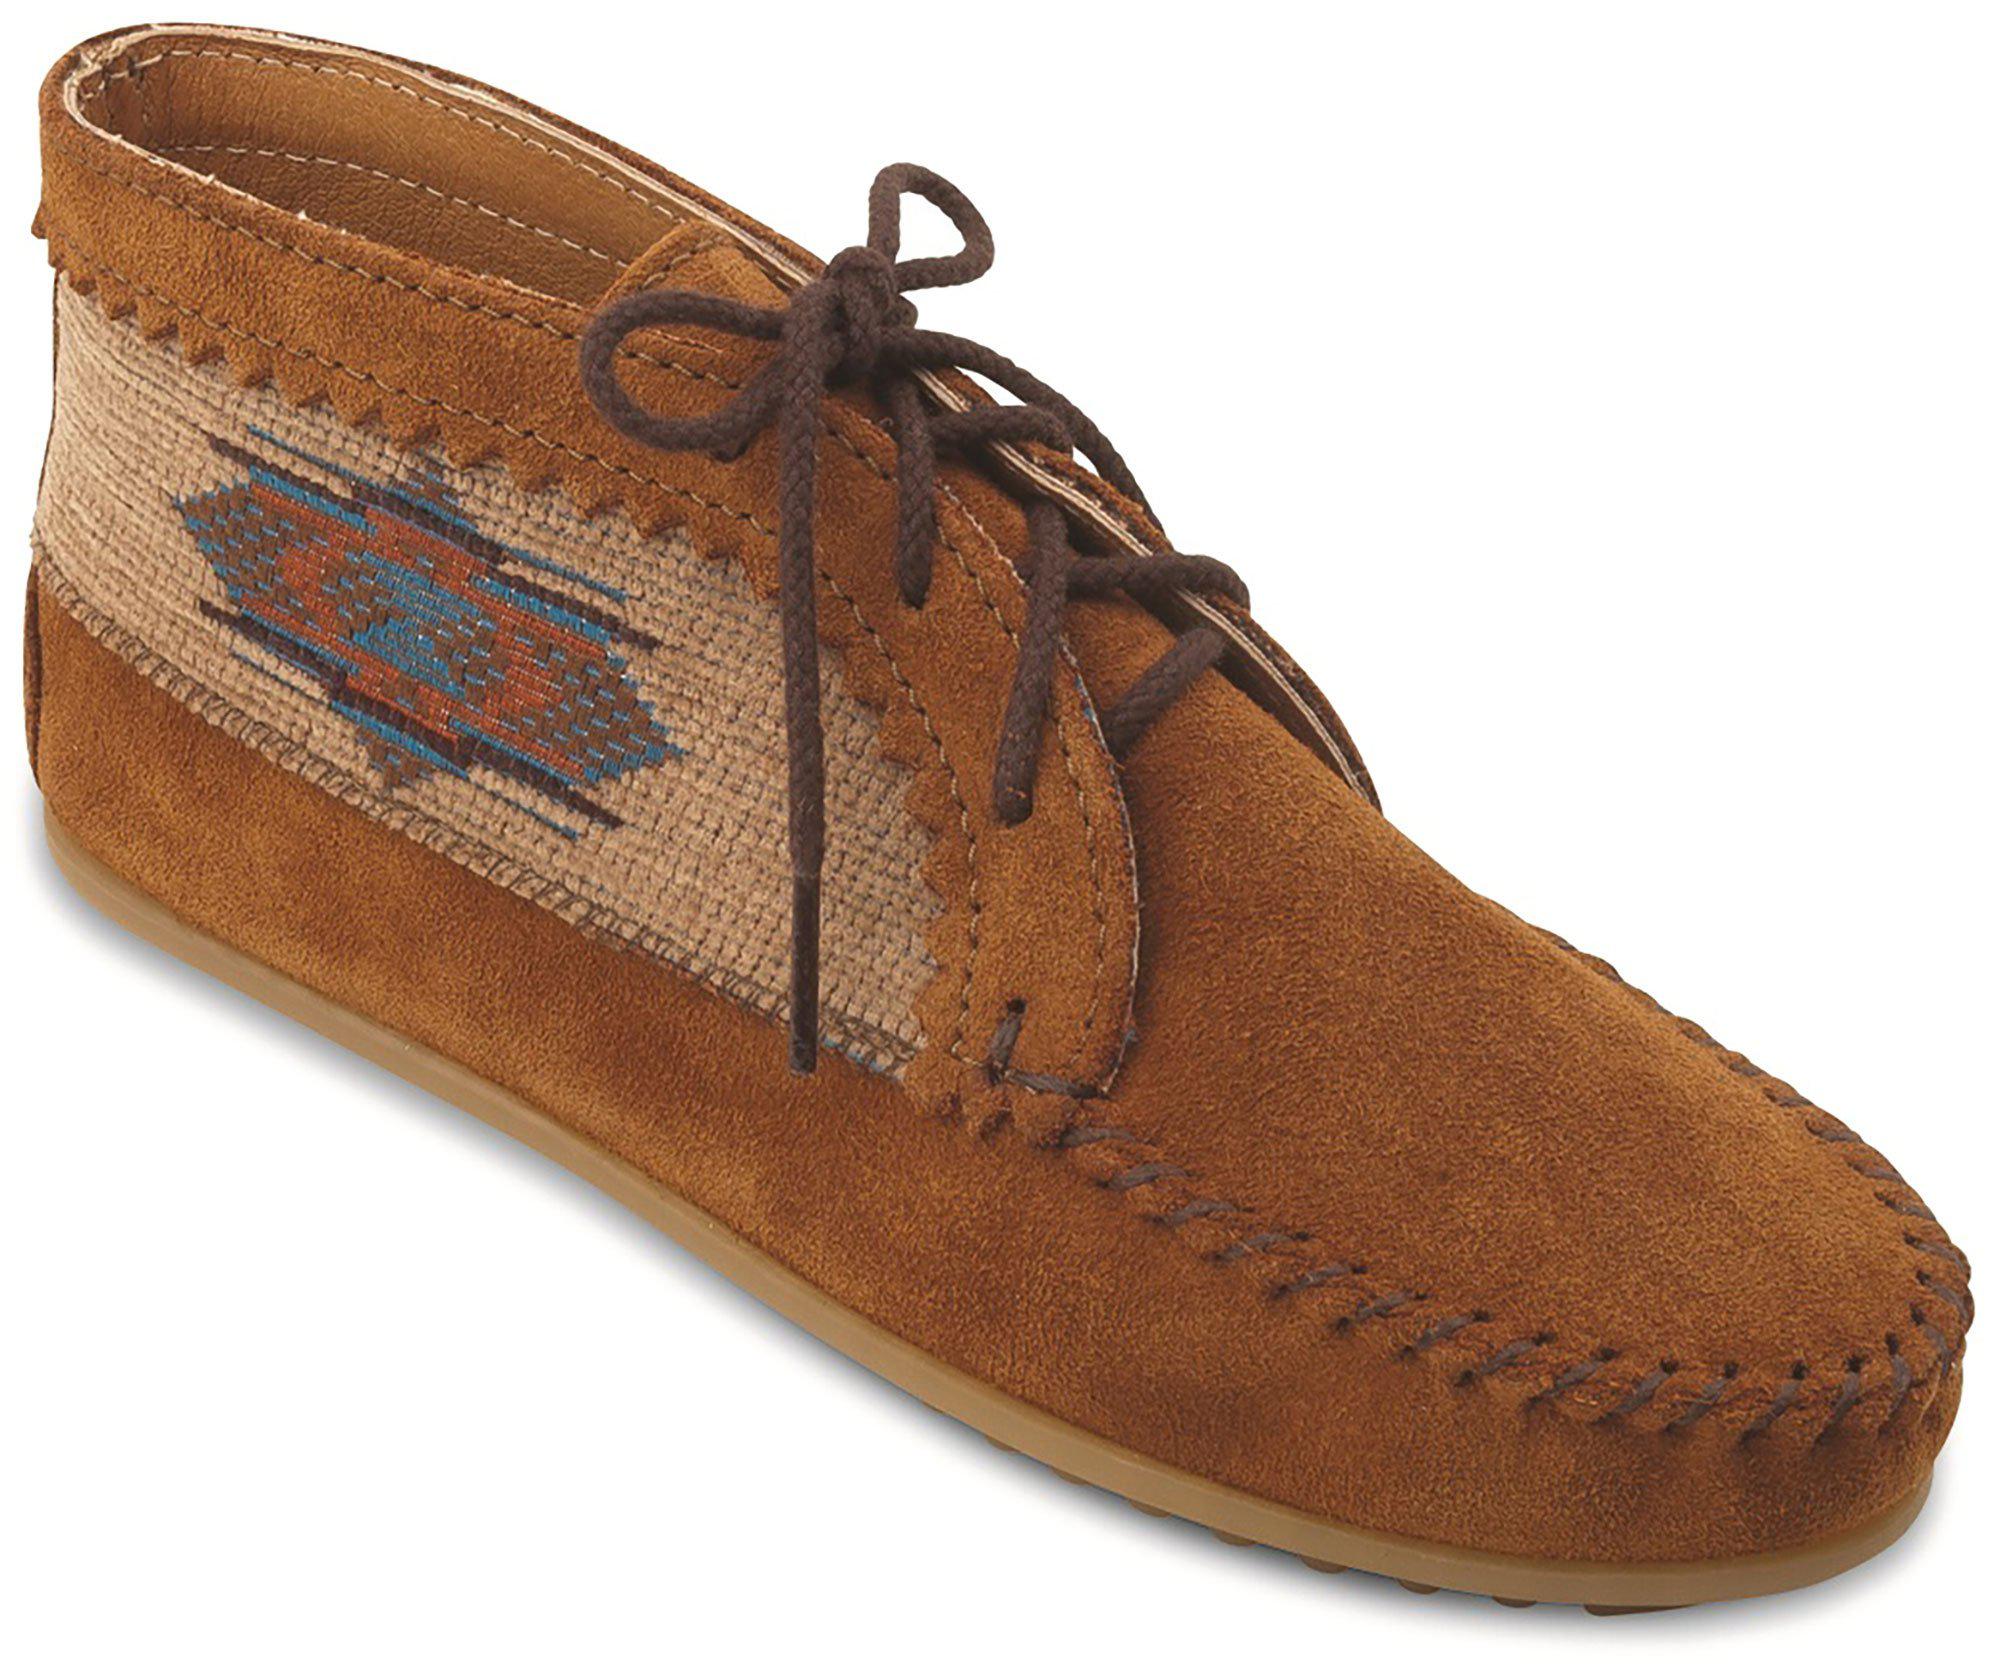 Lyst - Minnetonka El Paso Ankle Boot in Brown